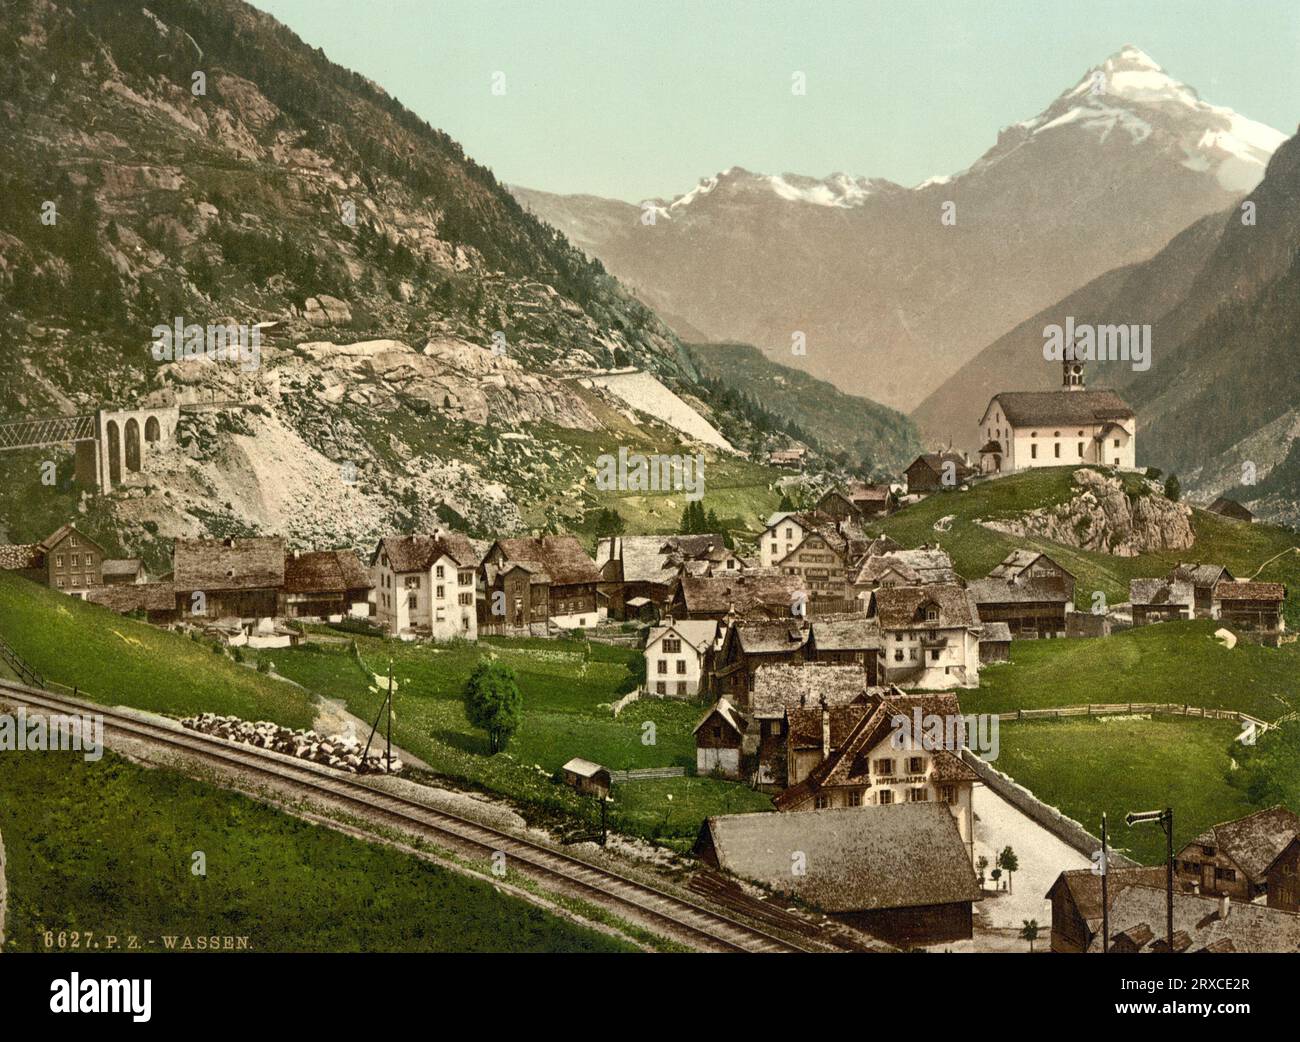 Maienreuss Bridge, St. Gotthard Railway, Wassen, Uri, Switzerland 1890. Stock Photo